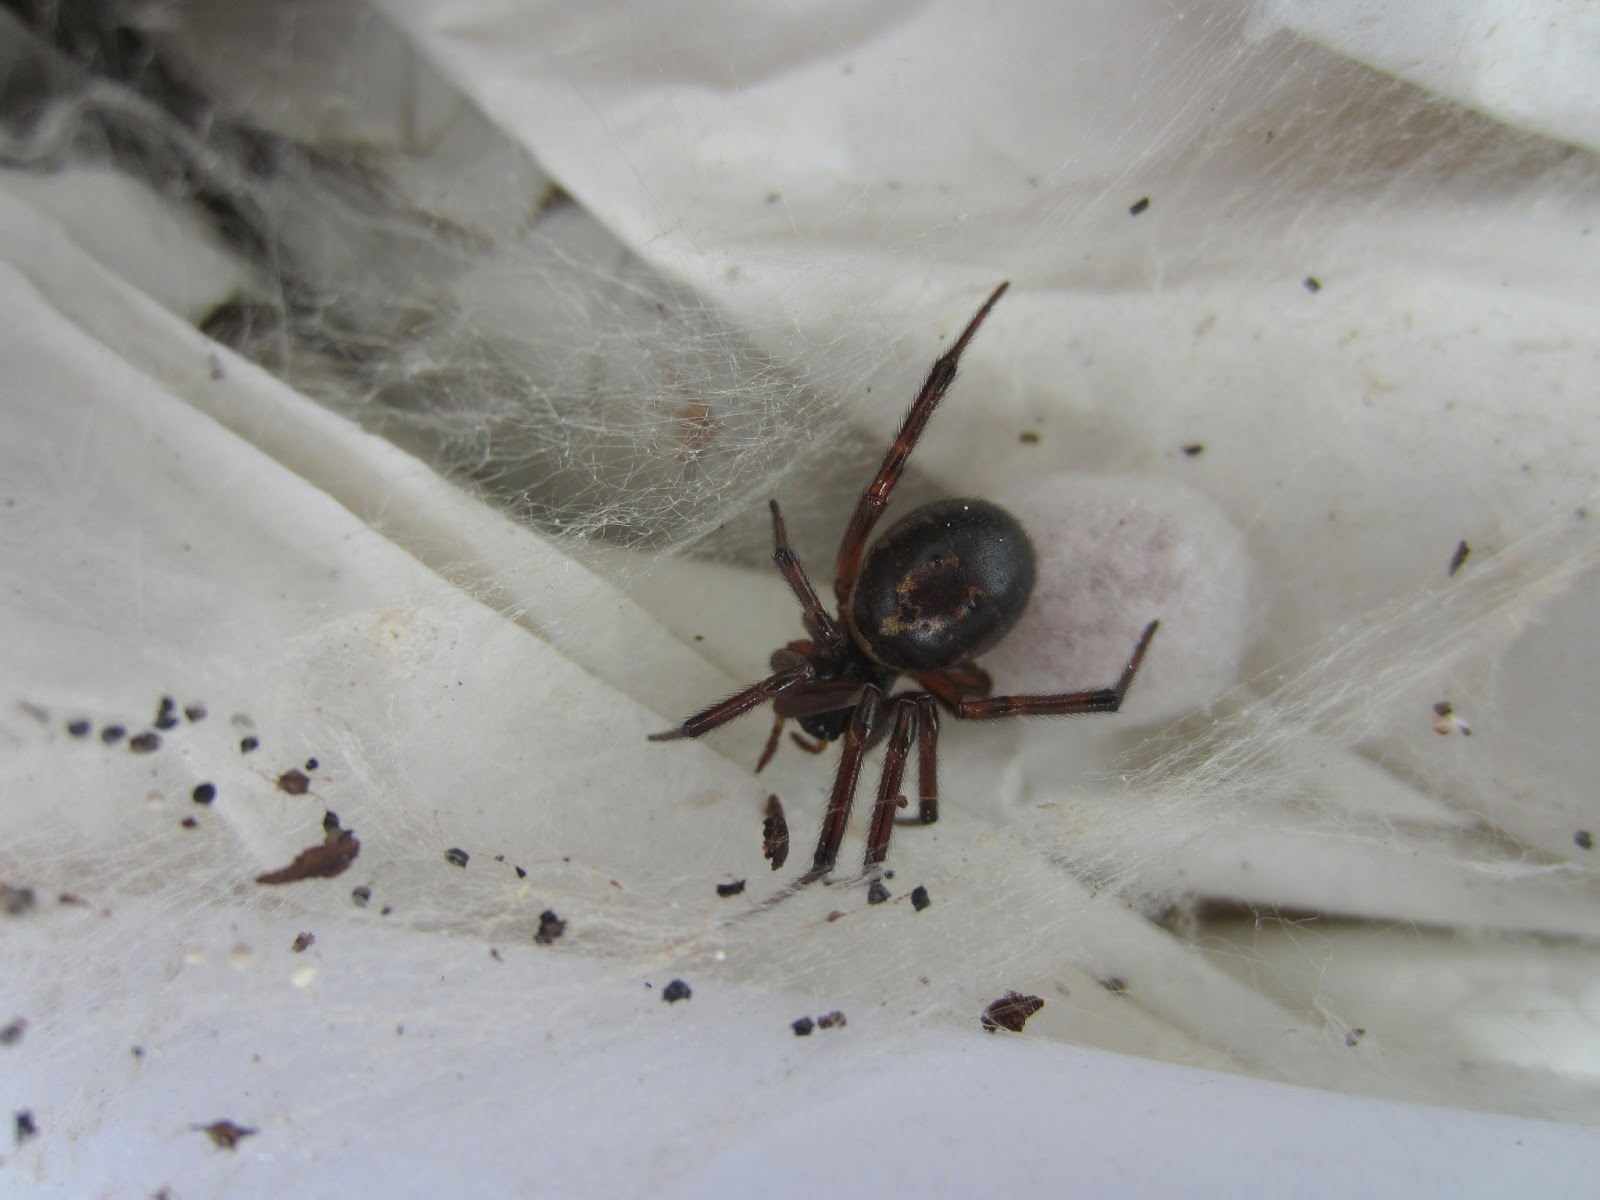 Black widow spider bite effects long term, baby black